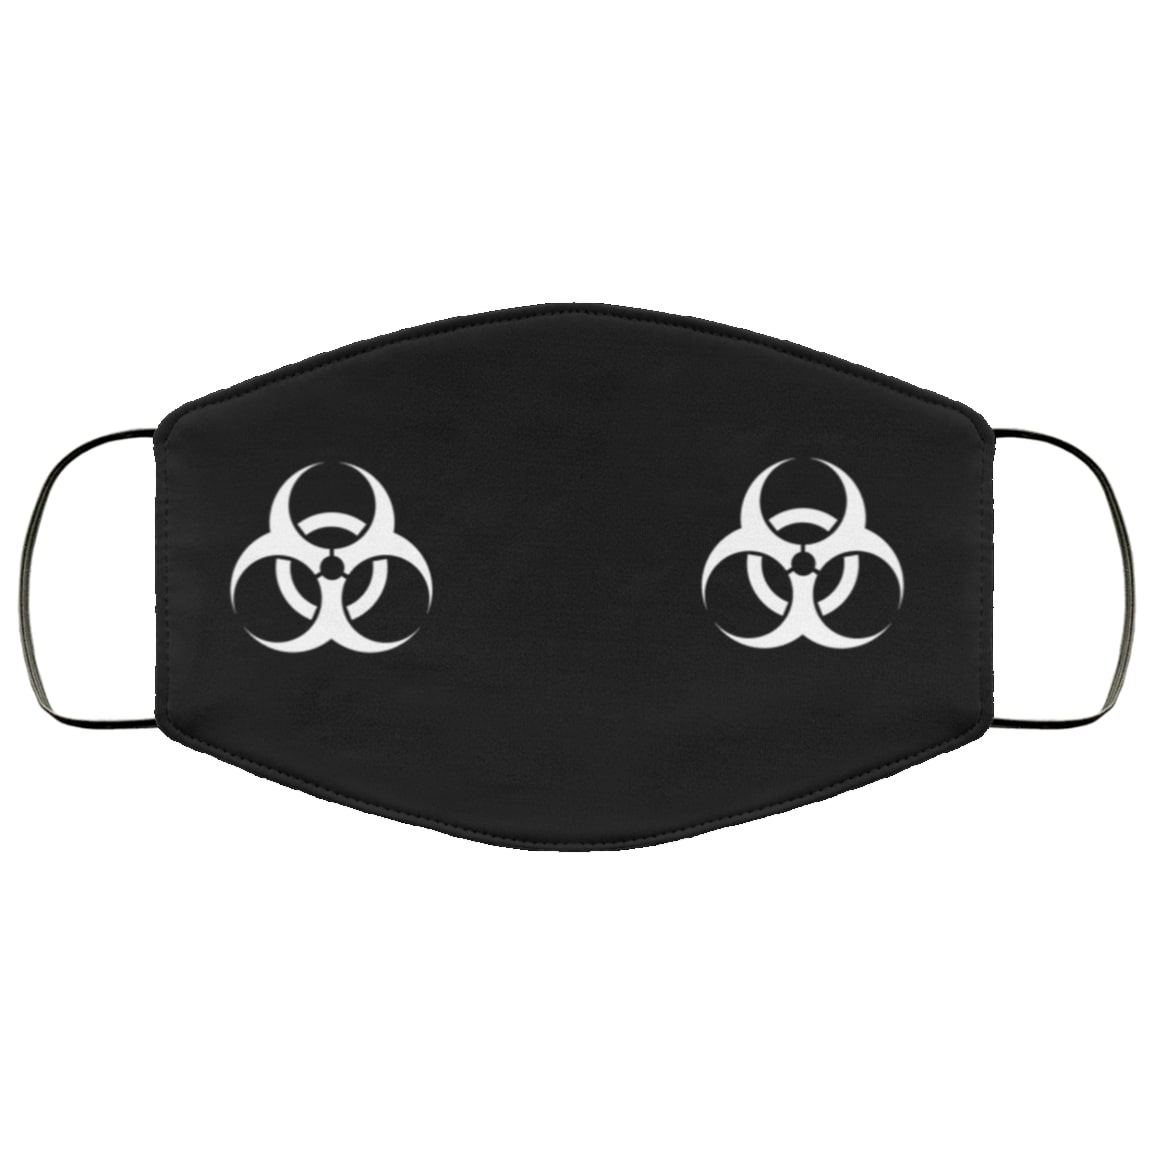 Biological hazard anti pollution face mask 1